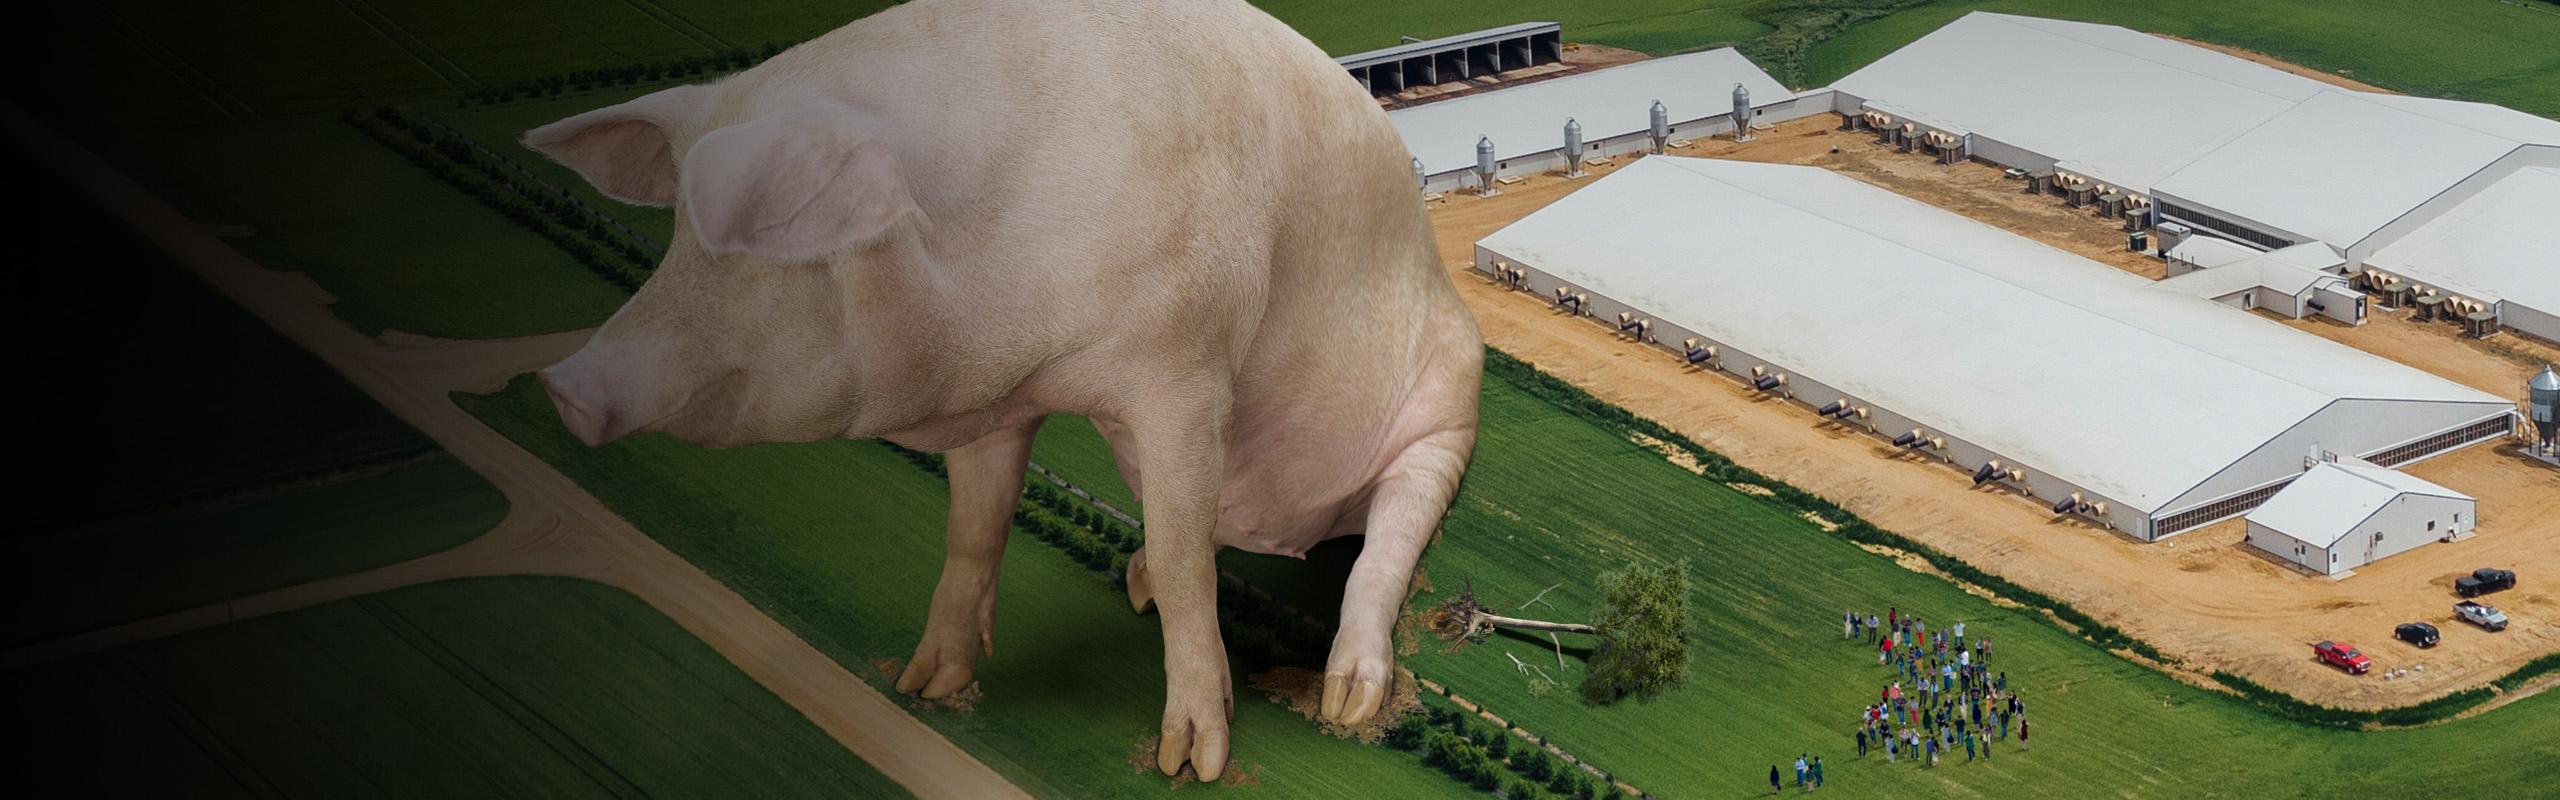 Giant pig on agricultural land